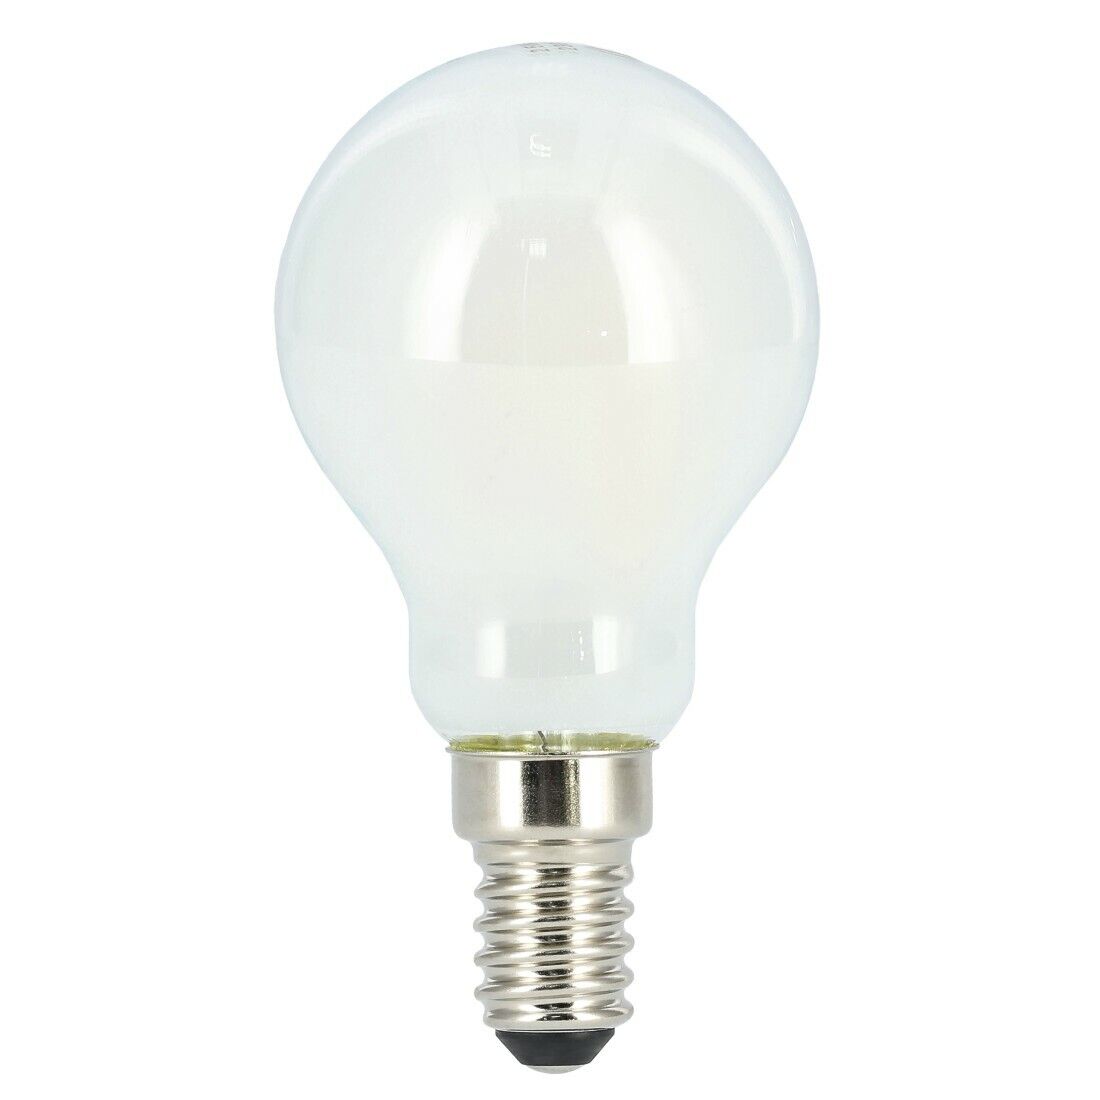 Bulb Filament LED, E14, 250lm Remp. 25W, Amp. Drop, Mate, Blc Chd